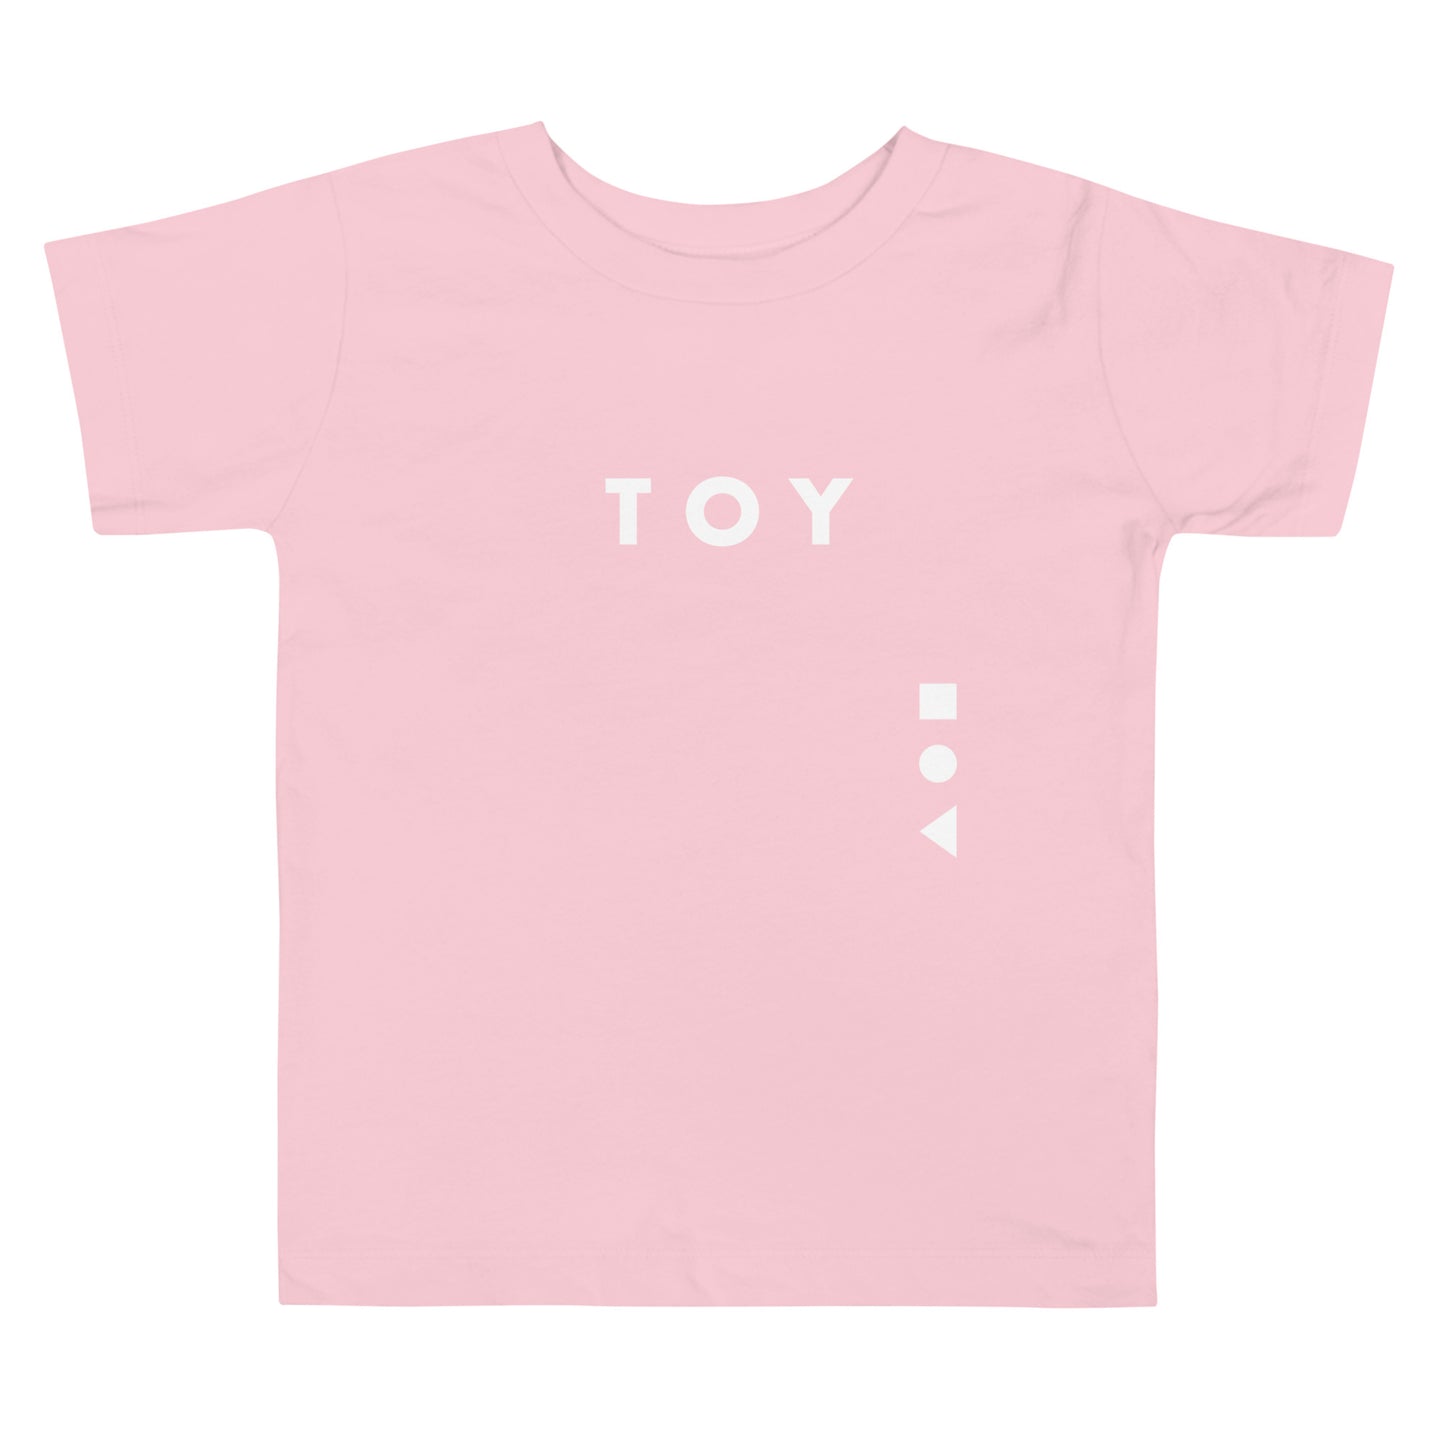 TOY [BLOCK] Series (W) Toddler Short Sleeve Tee